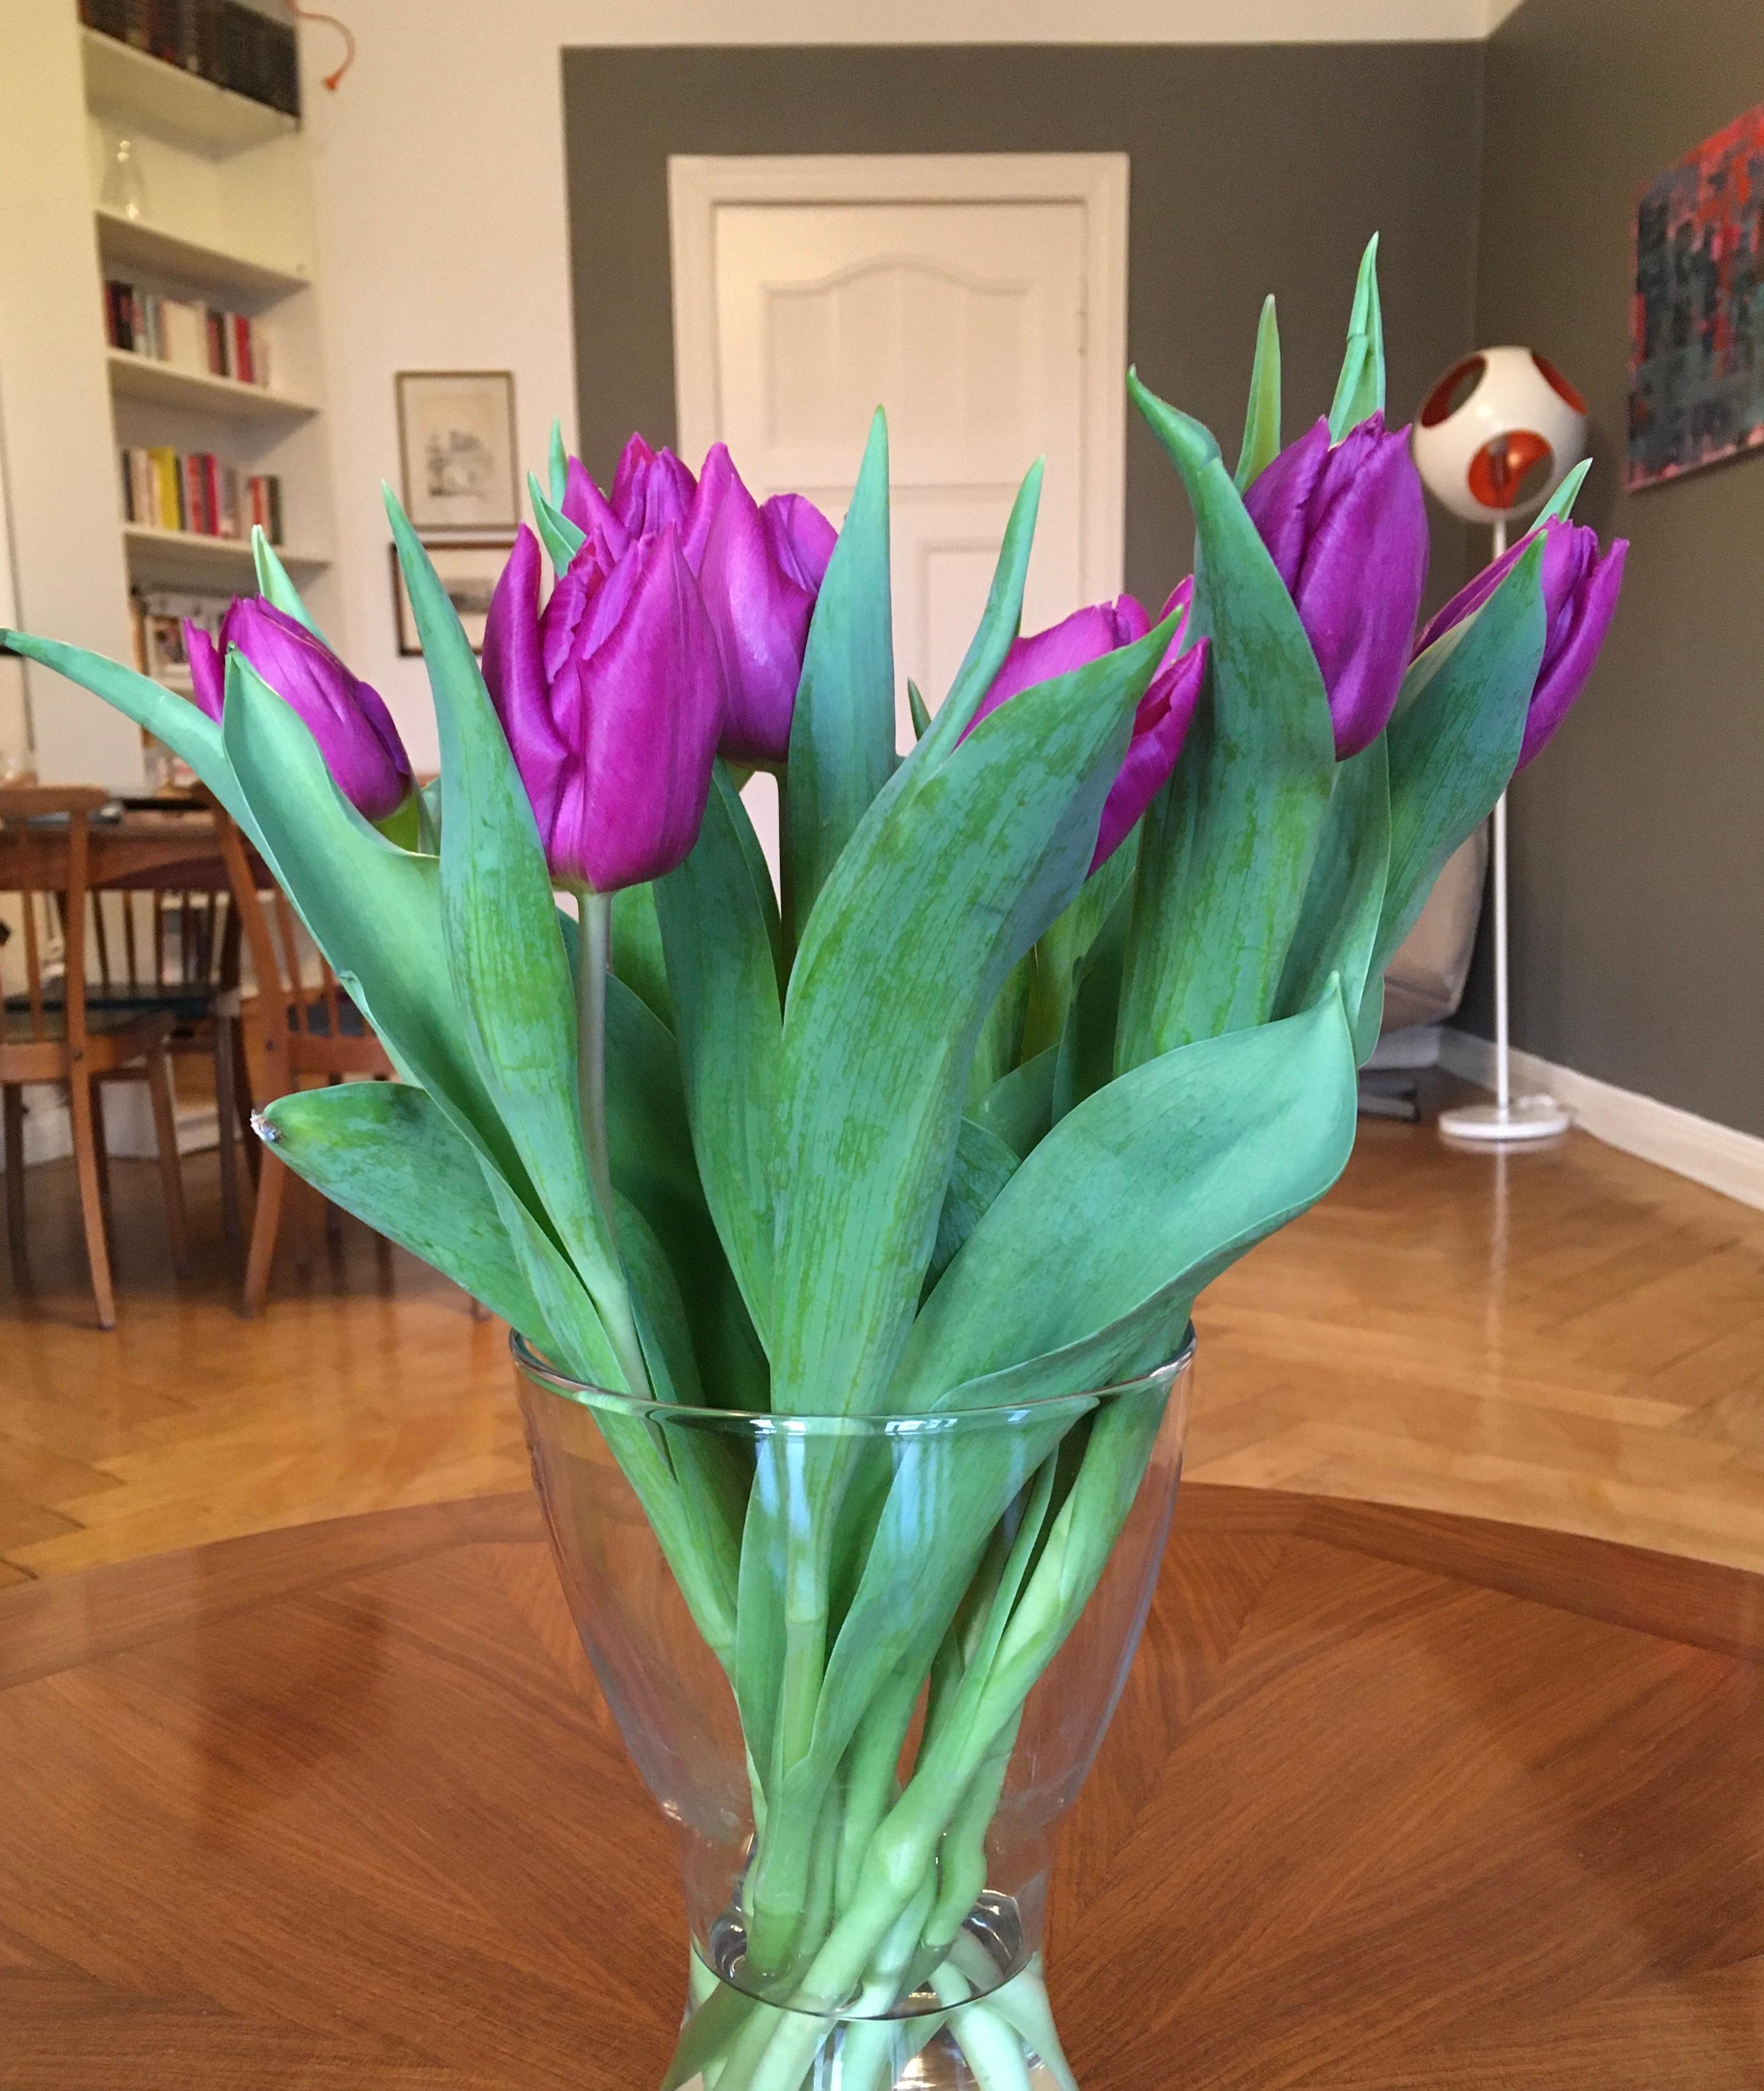 Tulpen! 🌷
#freshflowerfriday #tulpen #living #livingroom #weekend